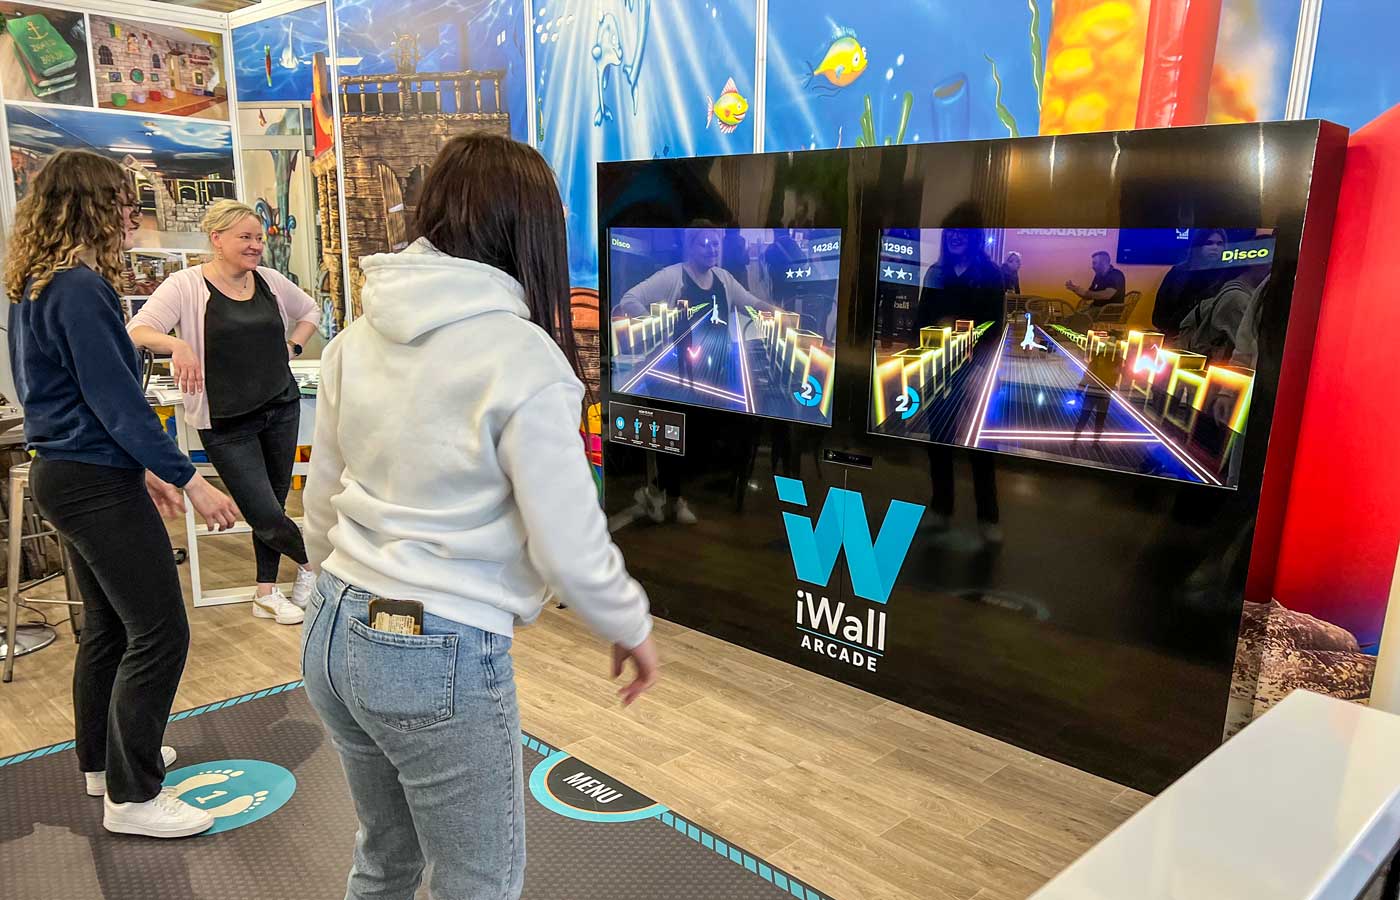 iWall Arcade - Giochi per Teenager in Area Divertimento